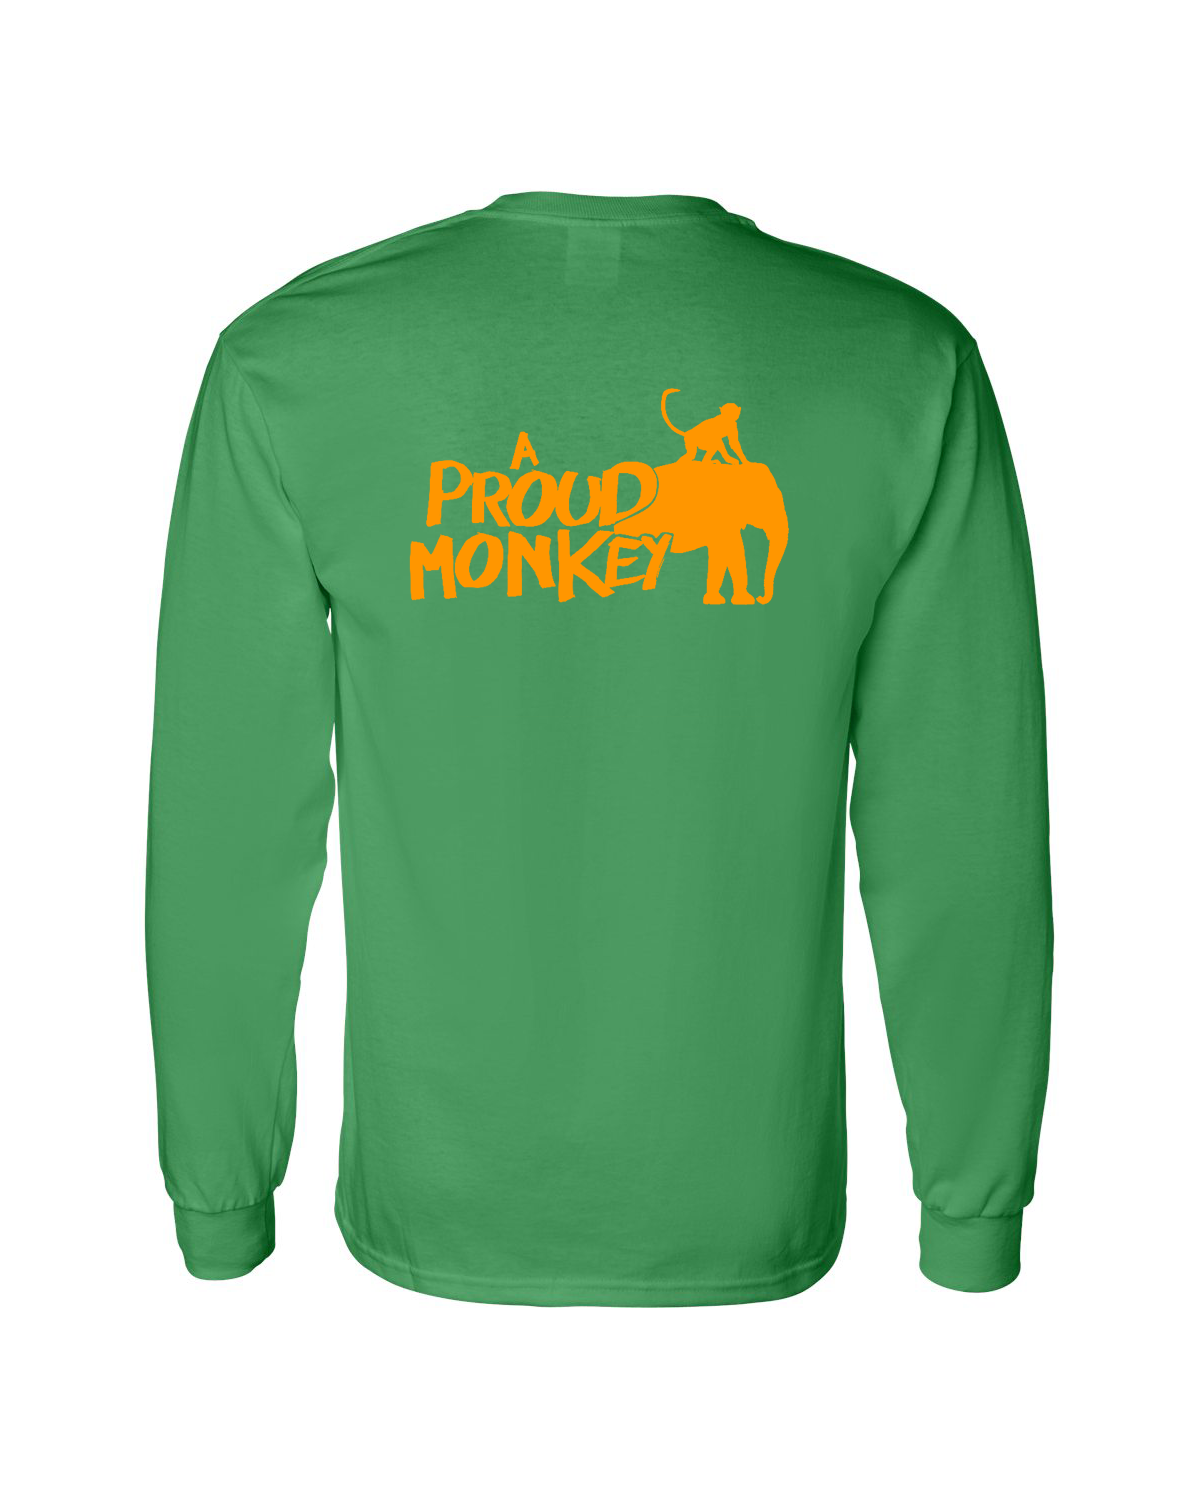 A Proud Monkey - Irish Green & Orange Long-Sleeve Shirt